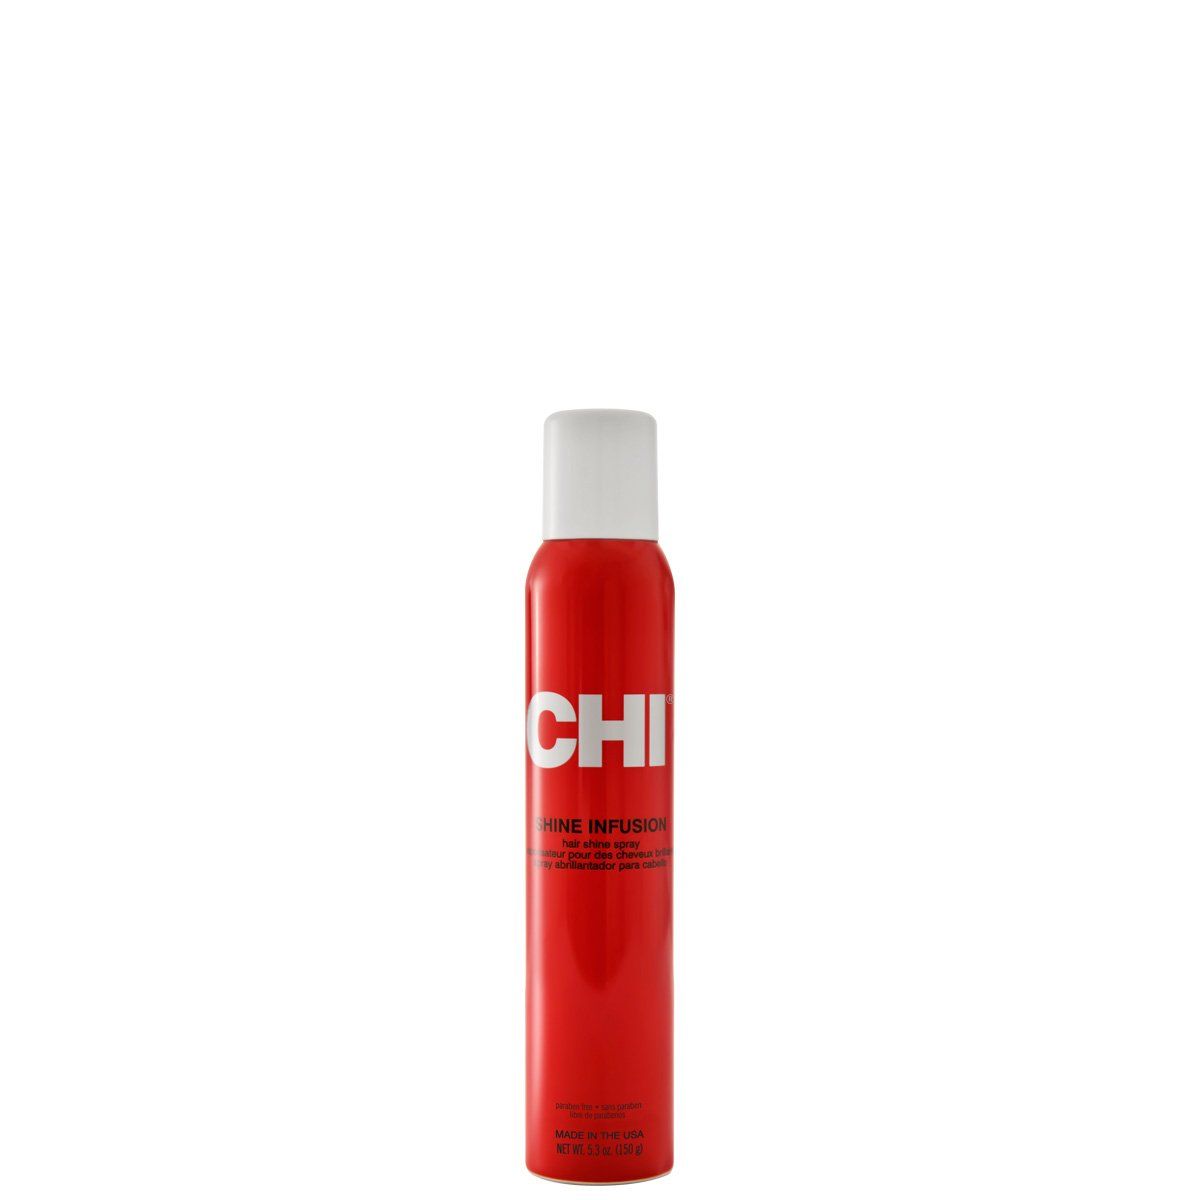 Спрей CHI Styling Shine Infusion Thermal Polishing Spray блеск инфра, 150 г термозащитный спрей thermal image